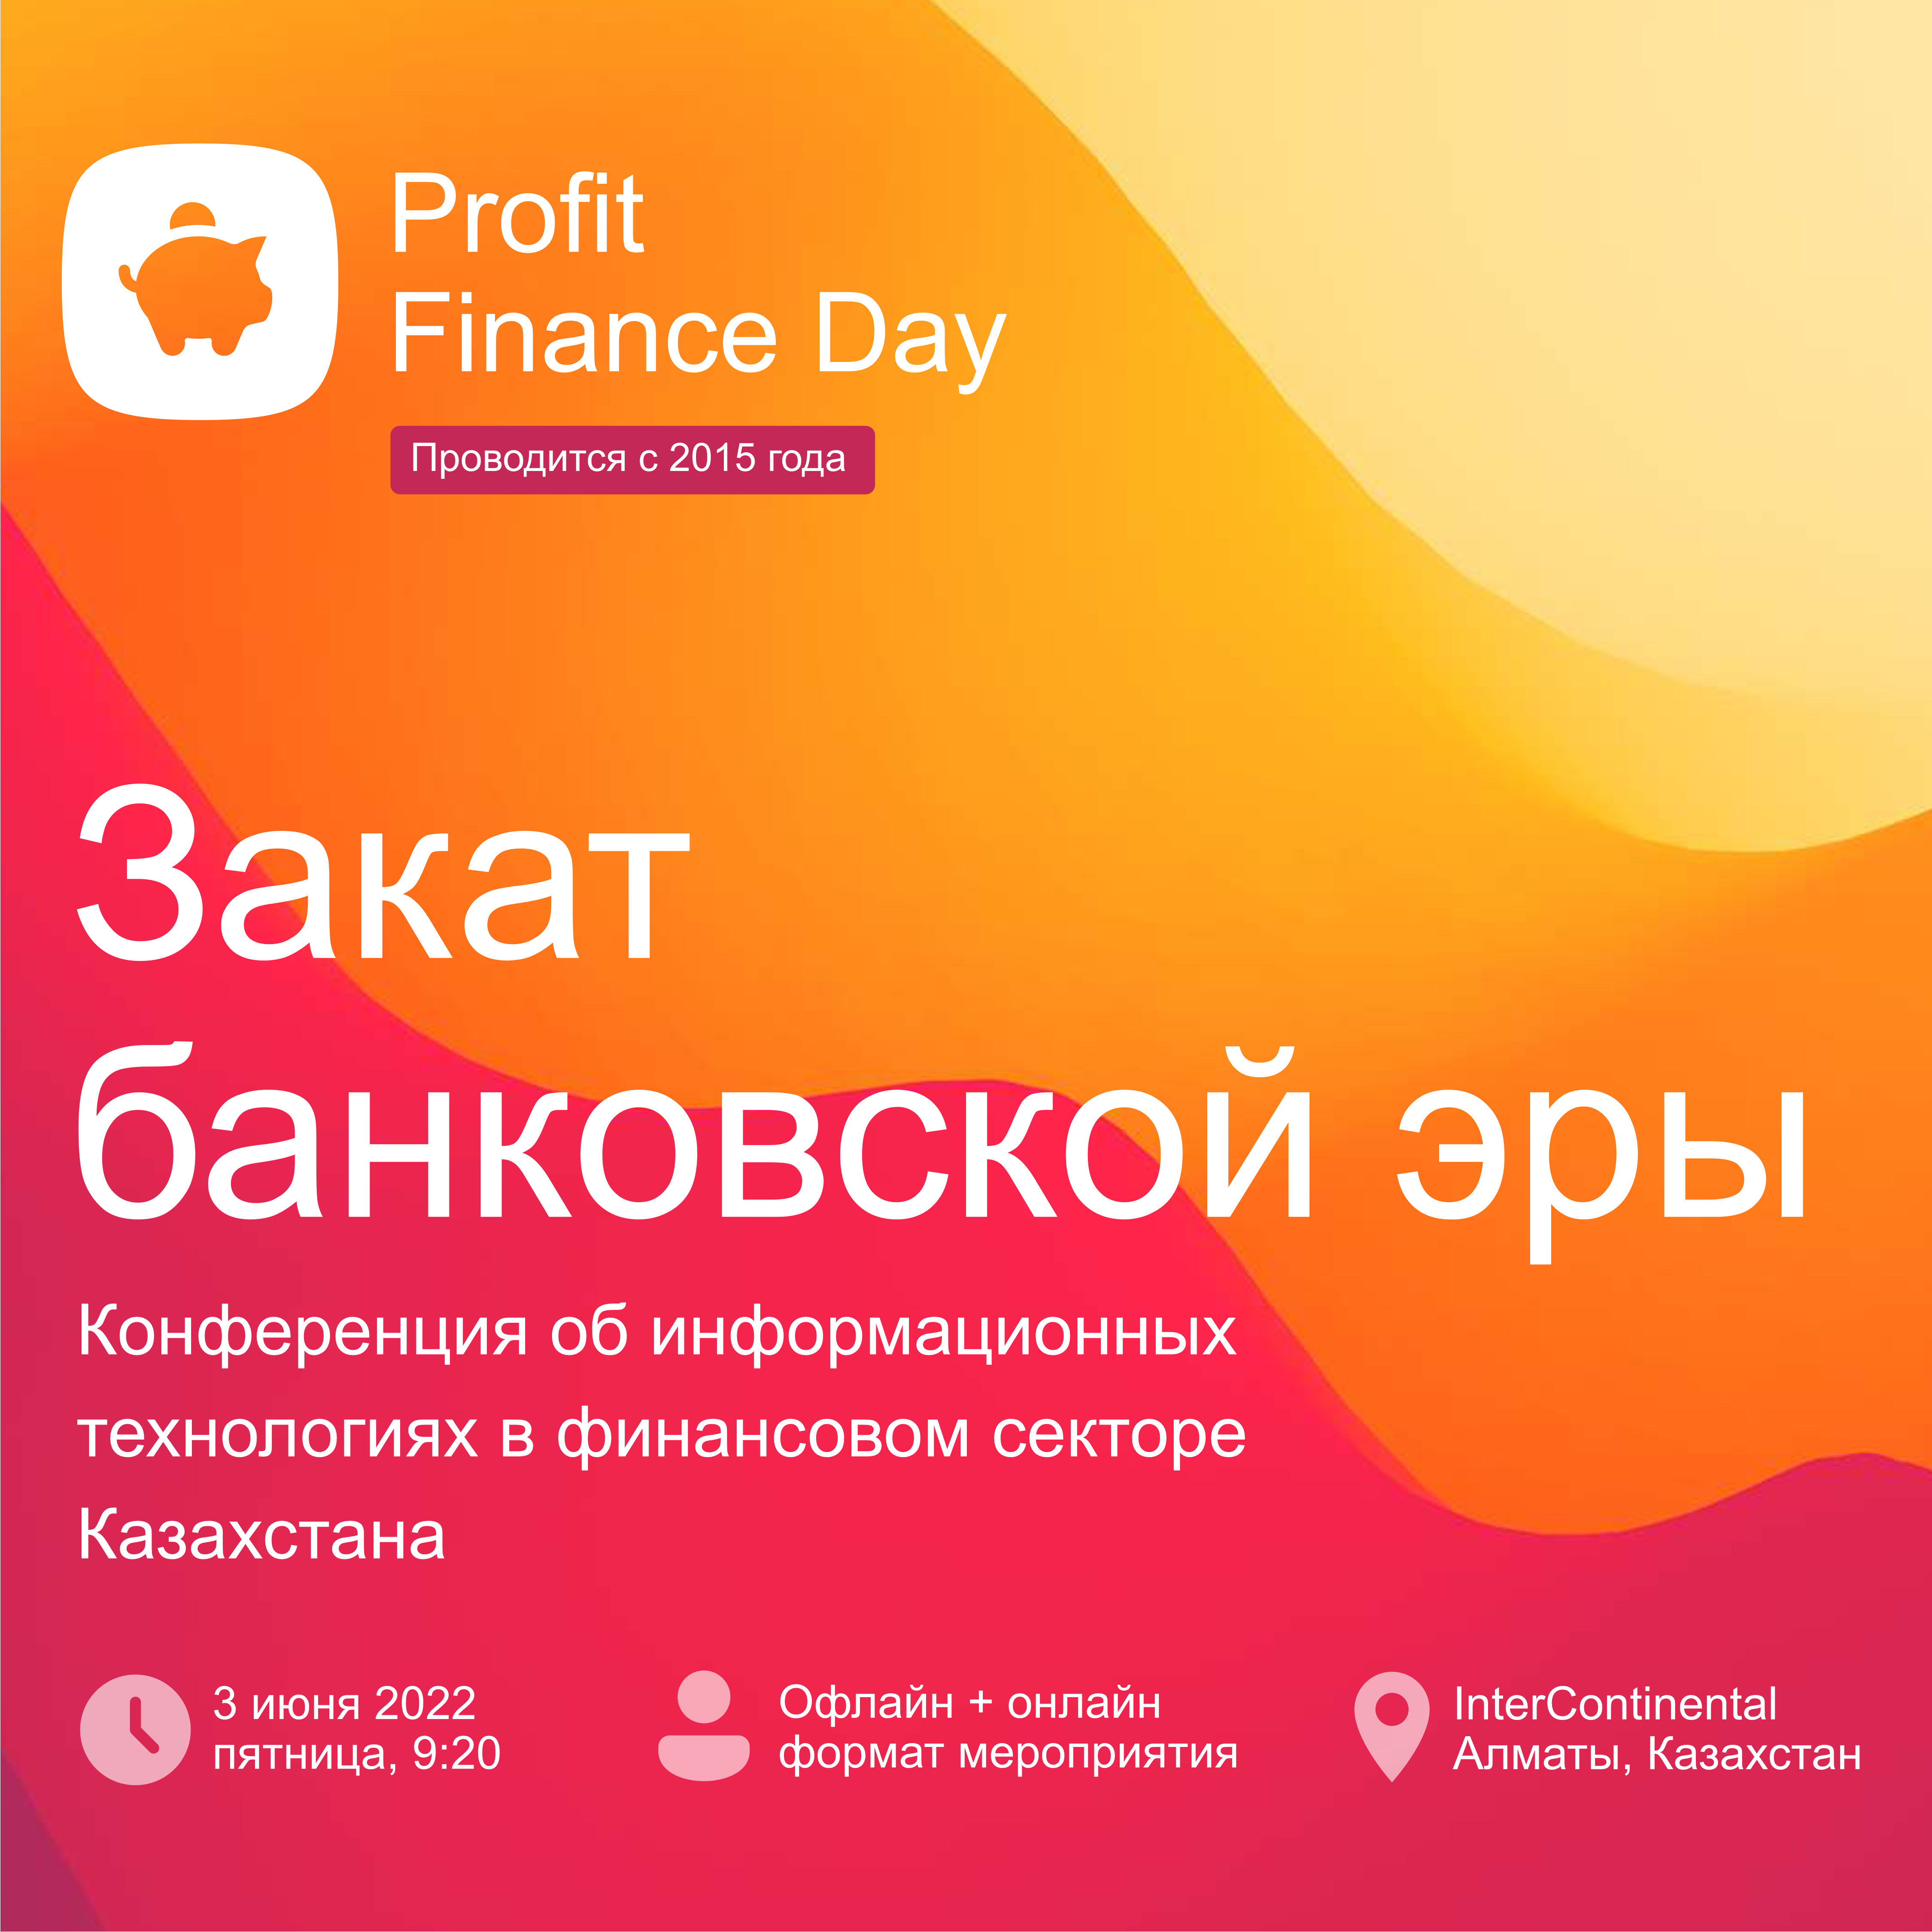 Profit Finance Day 2022